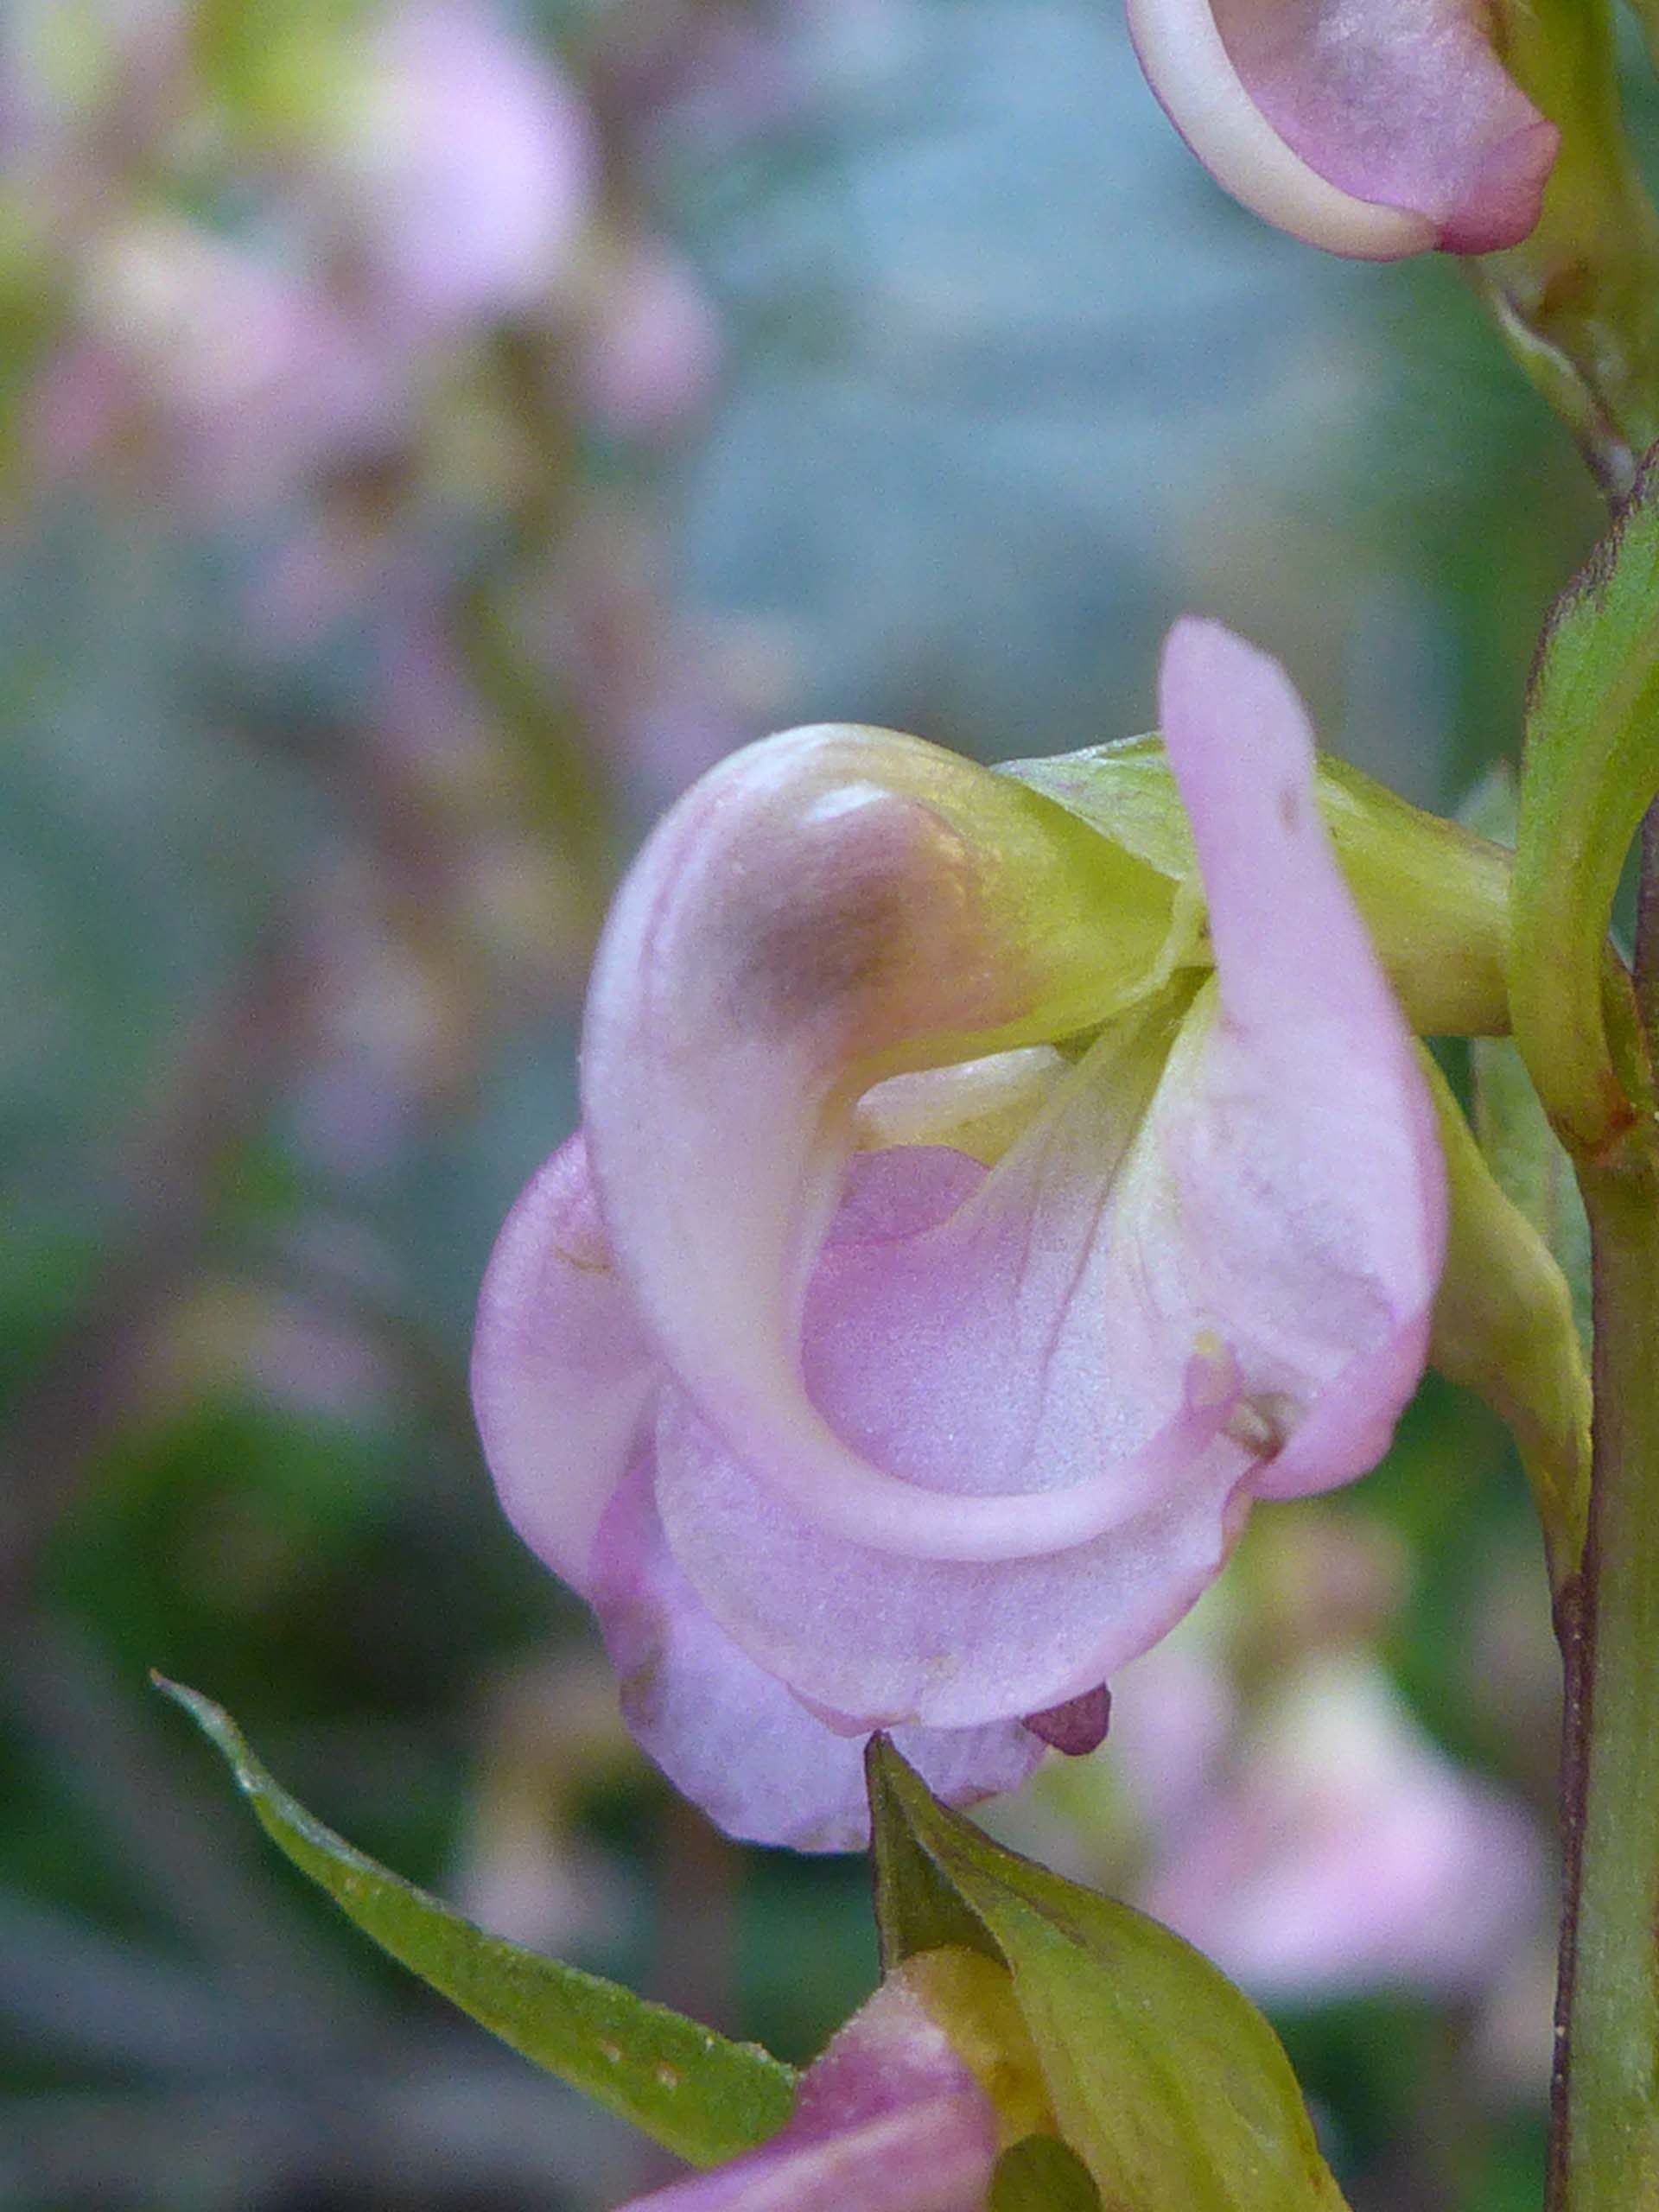 Leafy lousewort close-up. D. Burk.